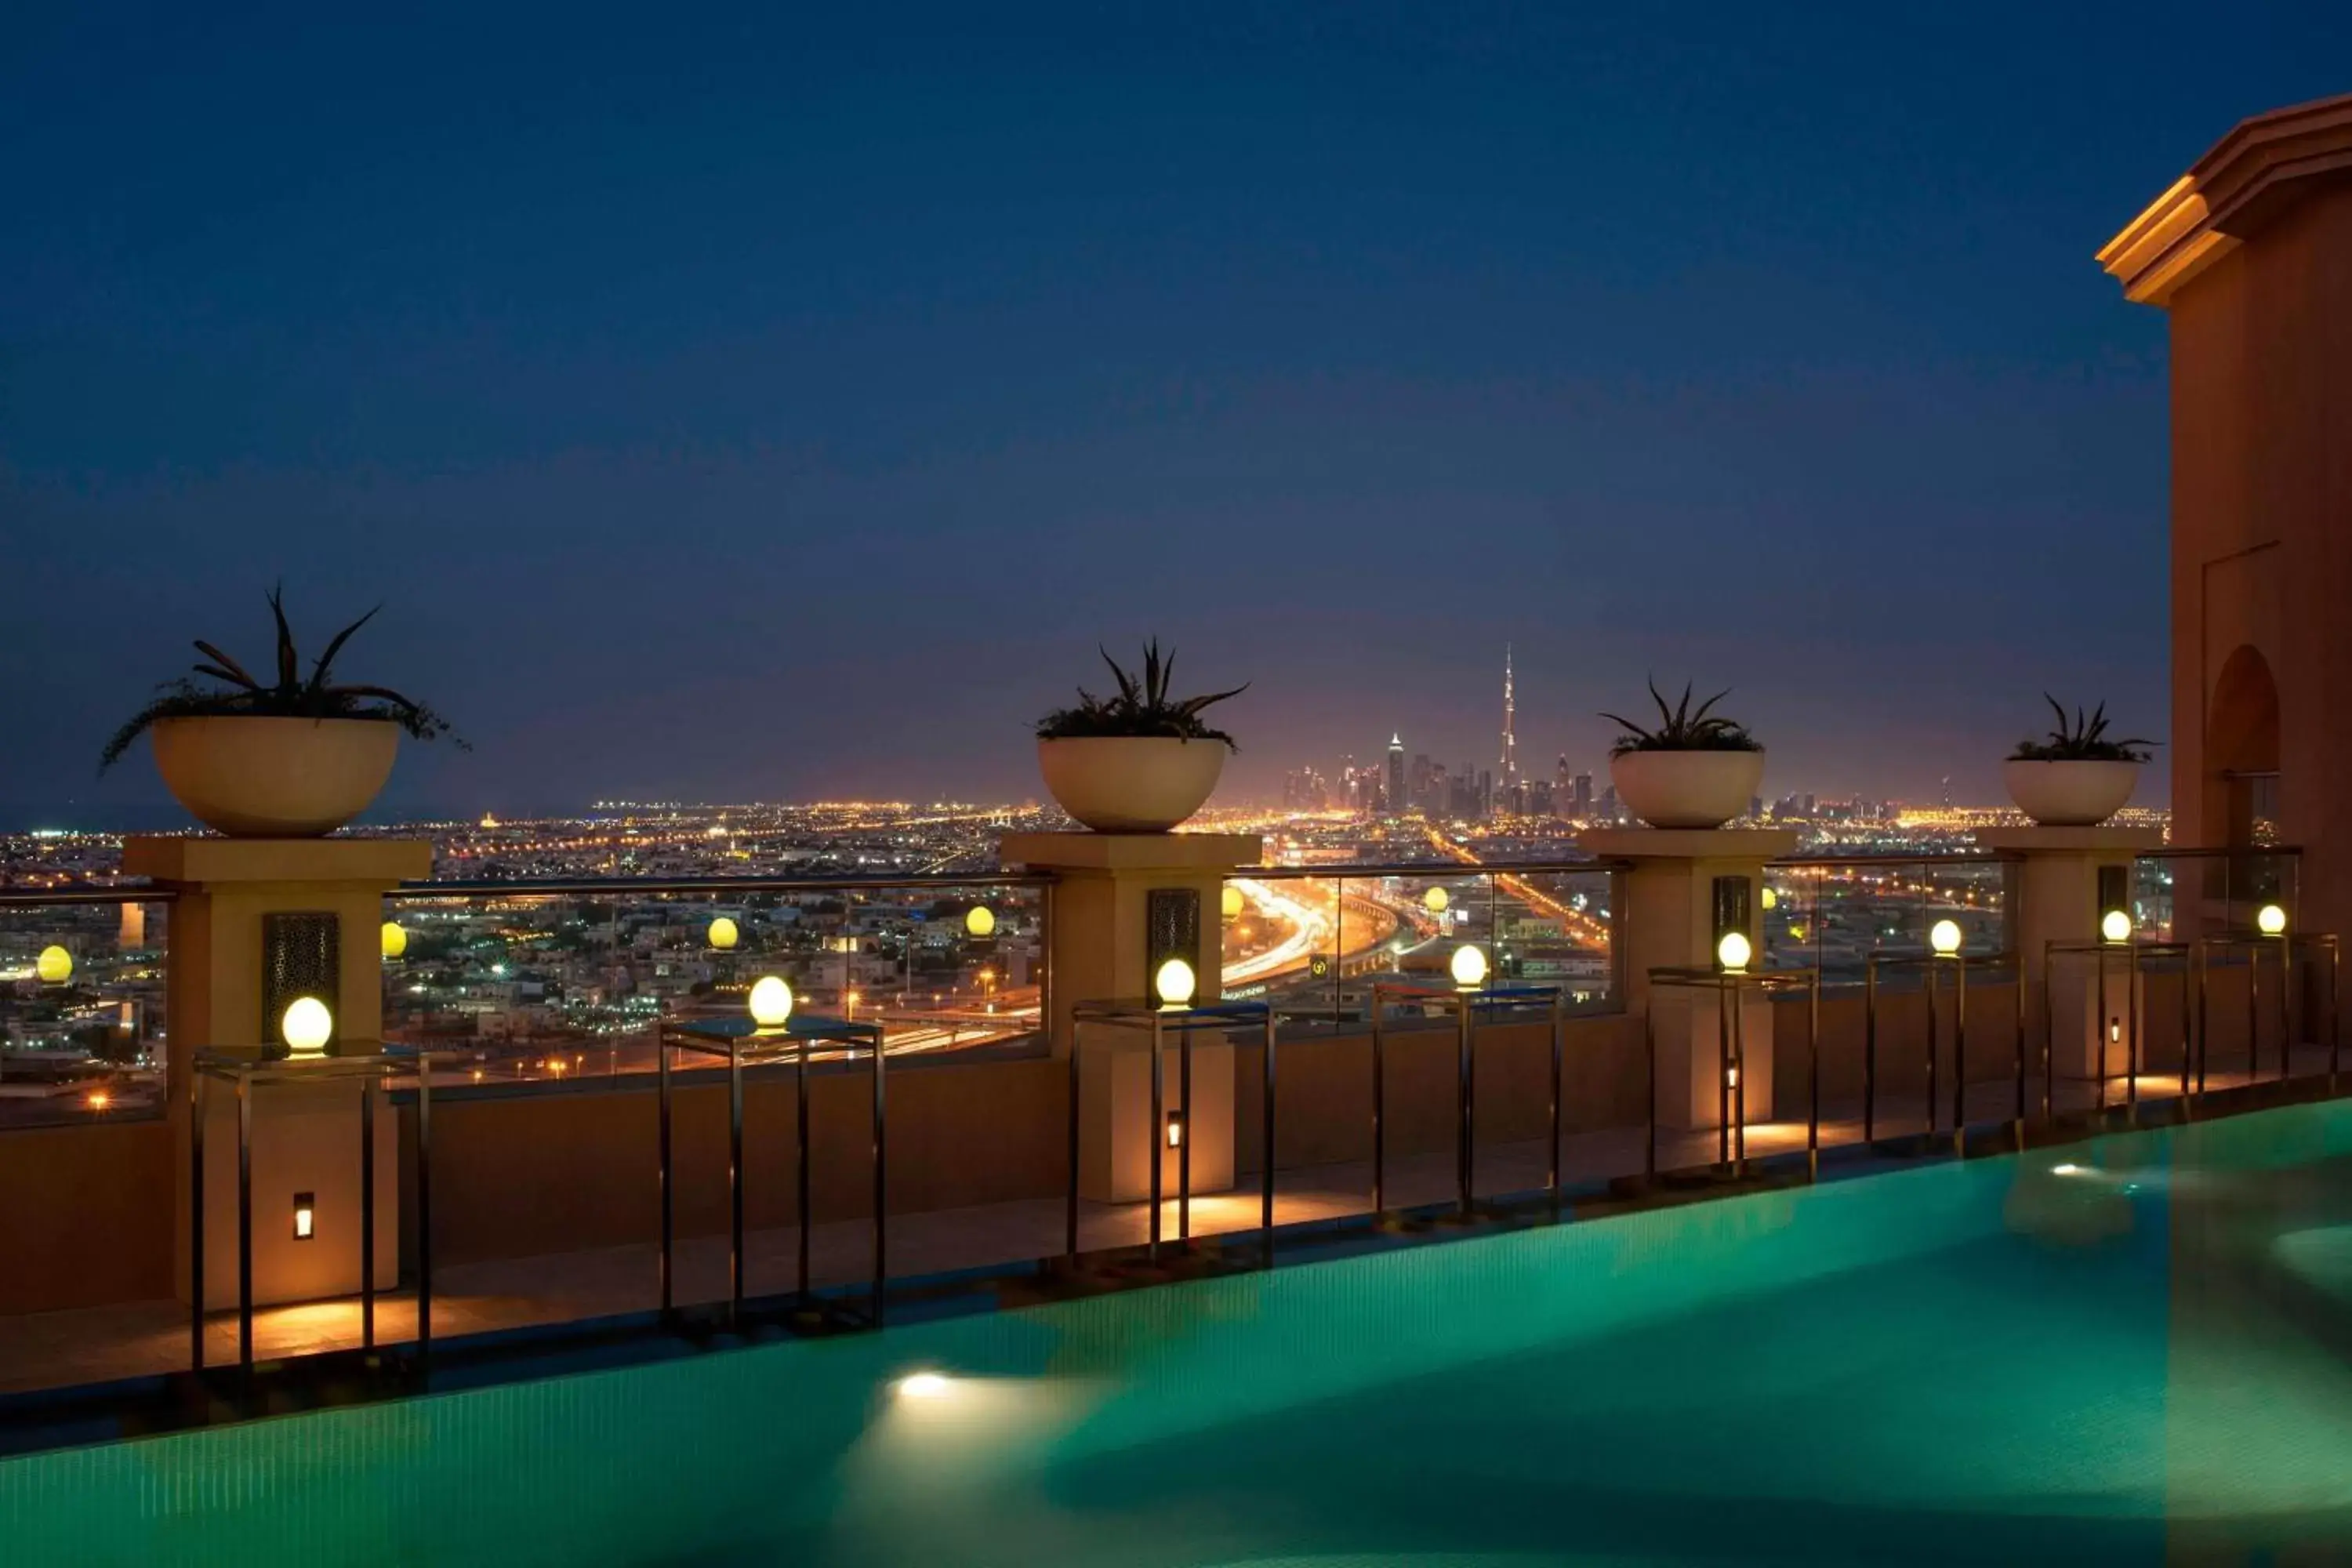 Fitness centre/facilities, Swimming Pool in Sheraton Mall of the Emirates Hotel, Dubai